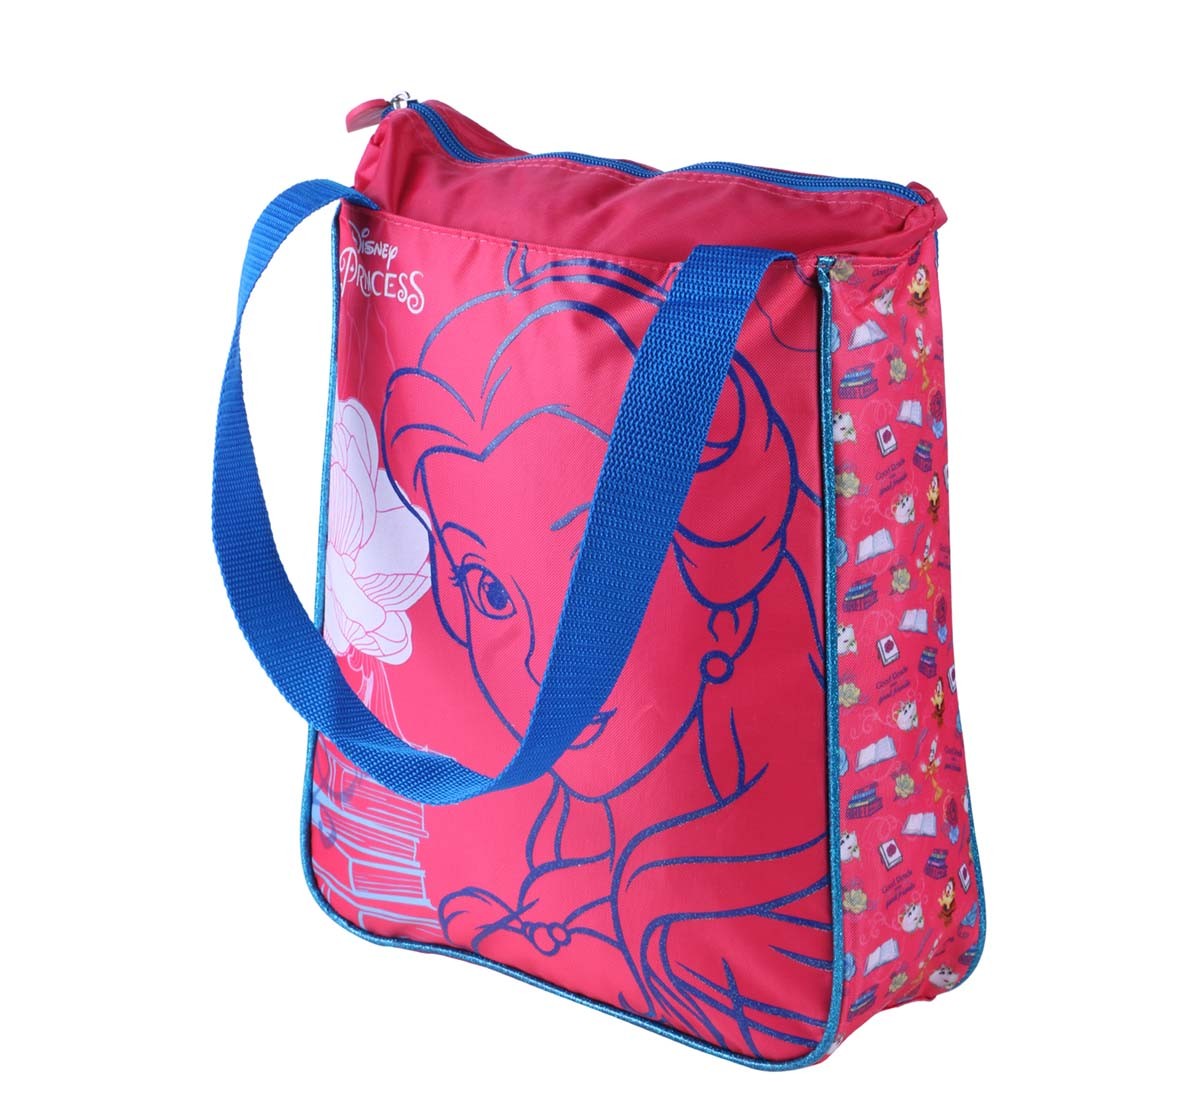 Disney Princess - Light Pink Handbags for age 3Y+